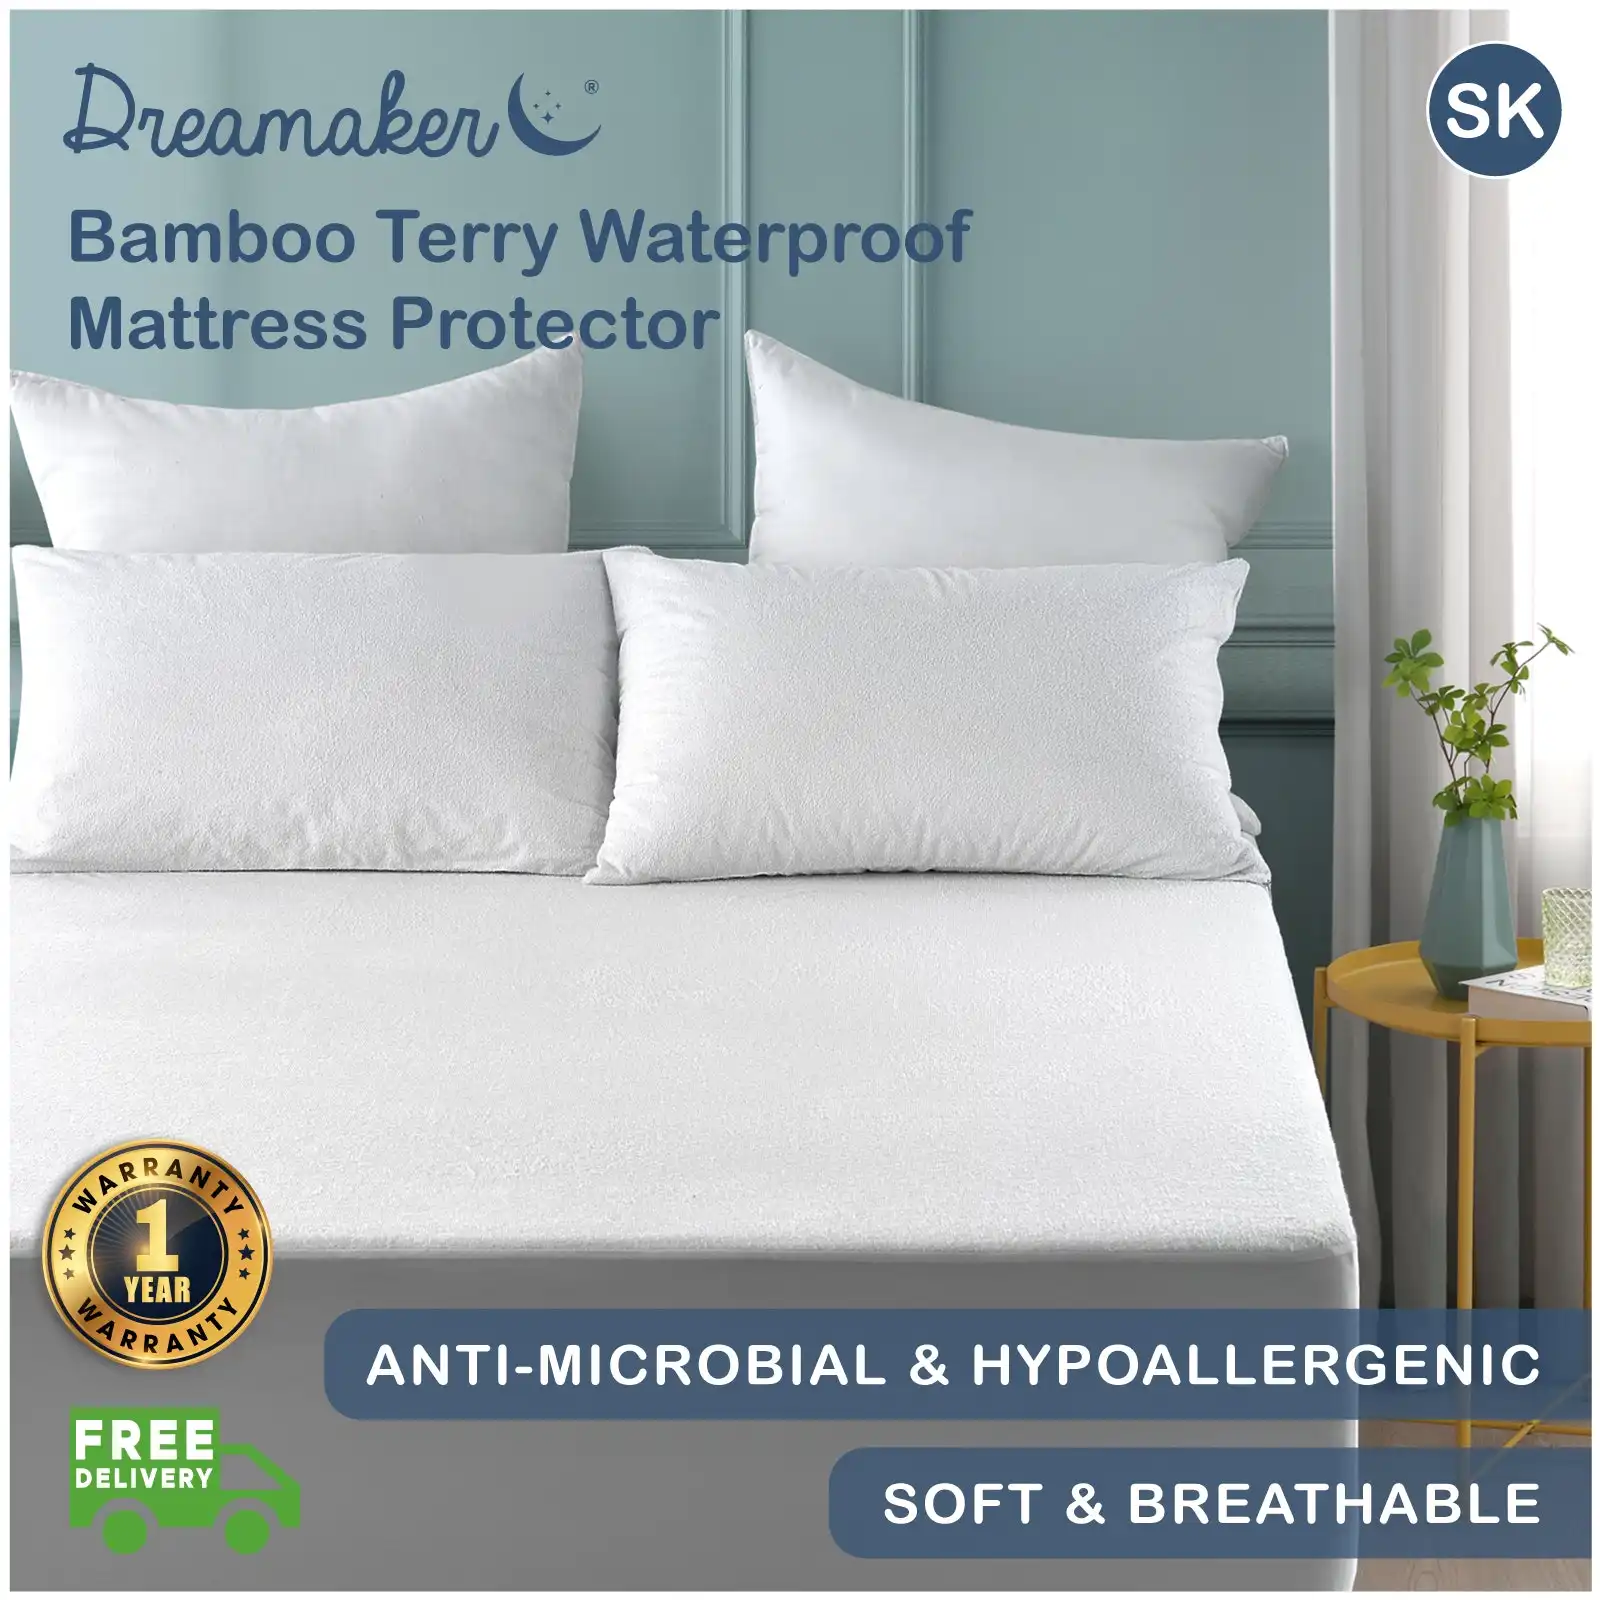 Dreamaker Bamboo Terry Waterproof Mattress Protector - Super King Bed